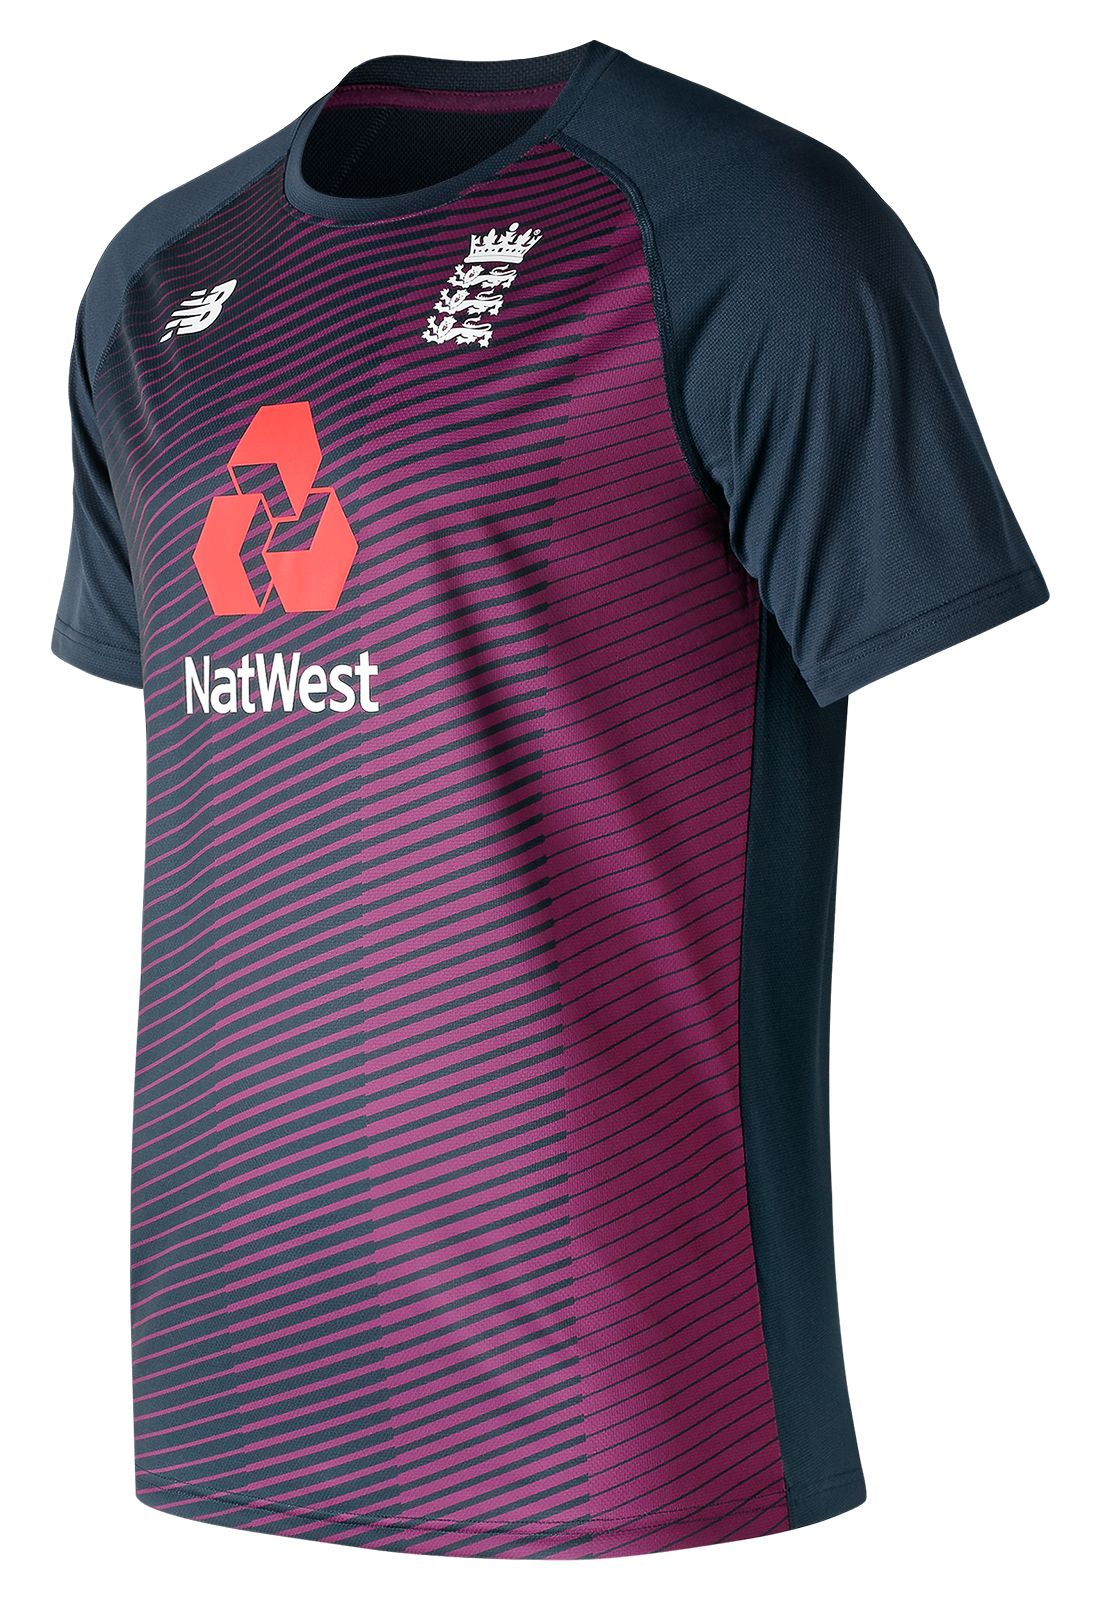 england cricket t20 jersey